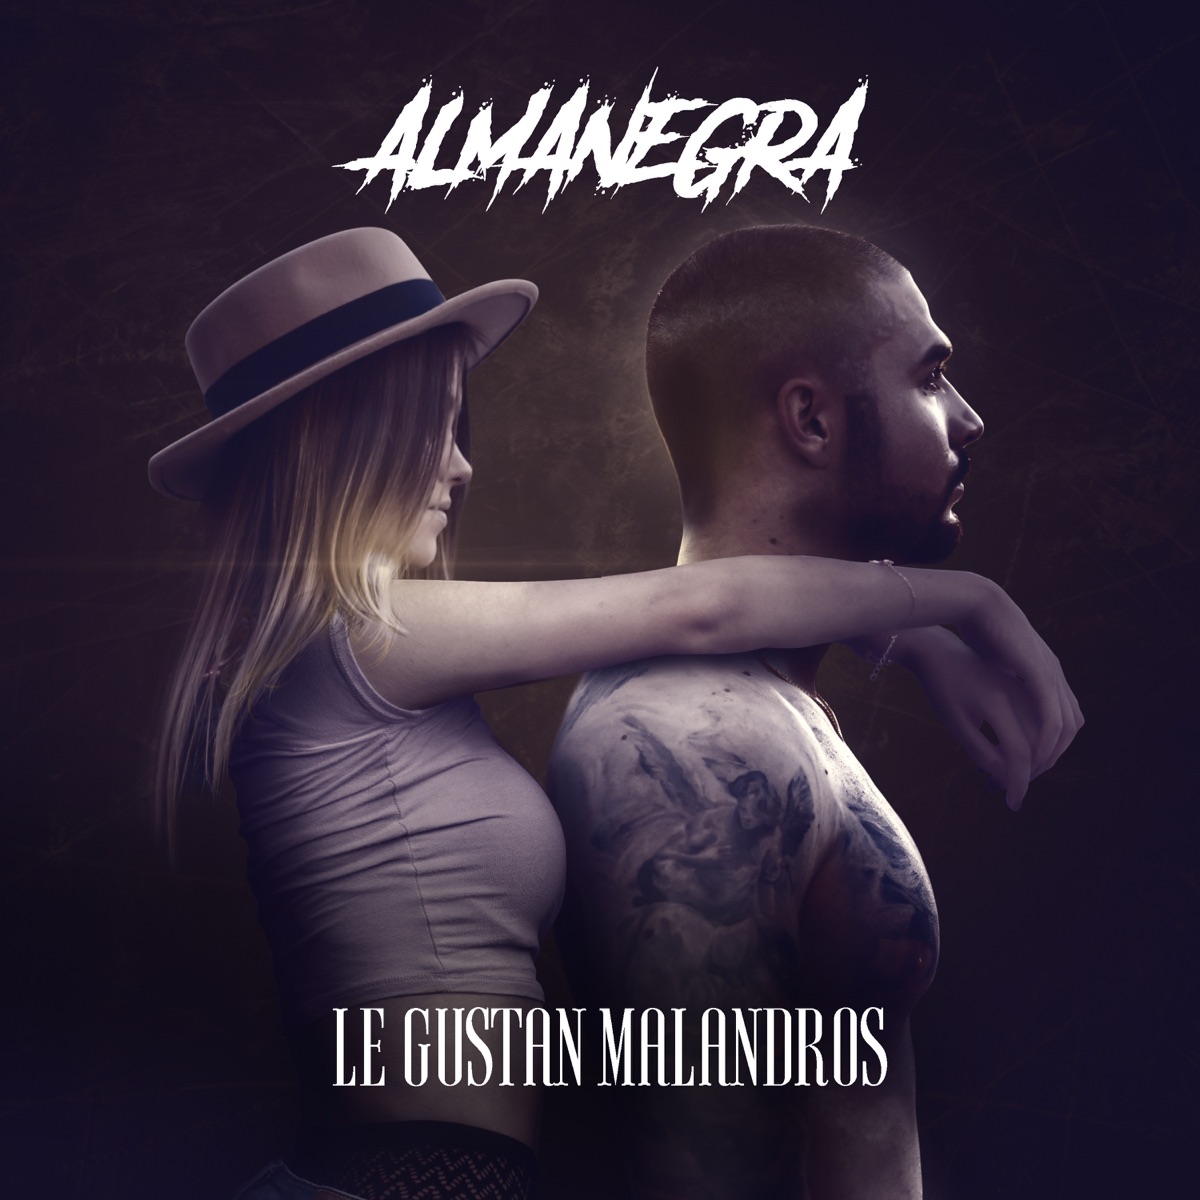 ‎Le Gustan Malandros - Single de Almanegra en Apple Music